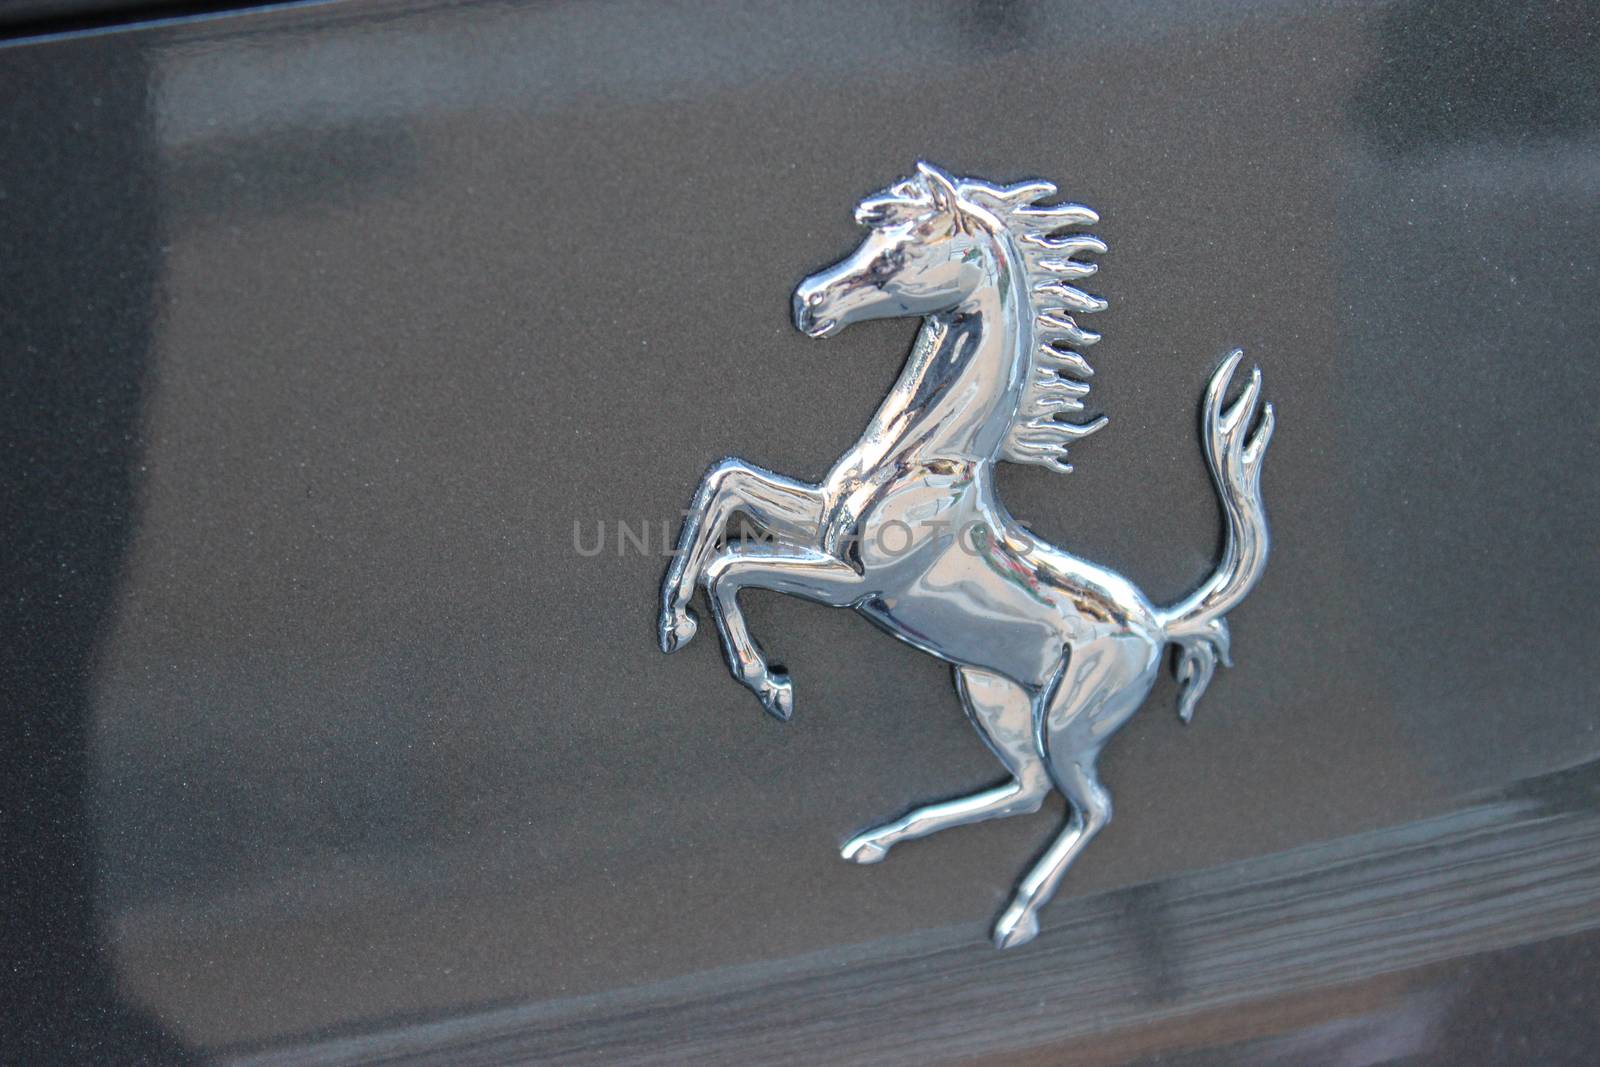 Ferrari Prancing Horse by bensib